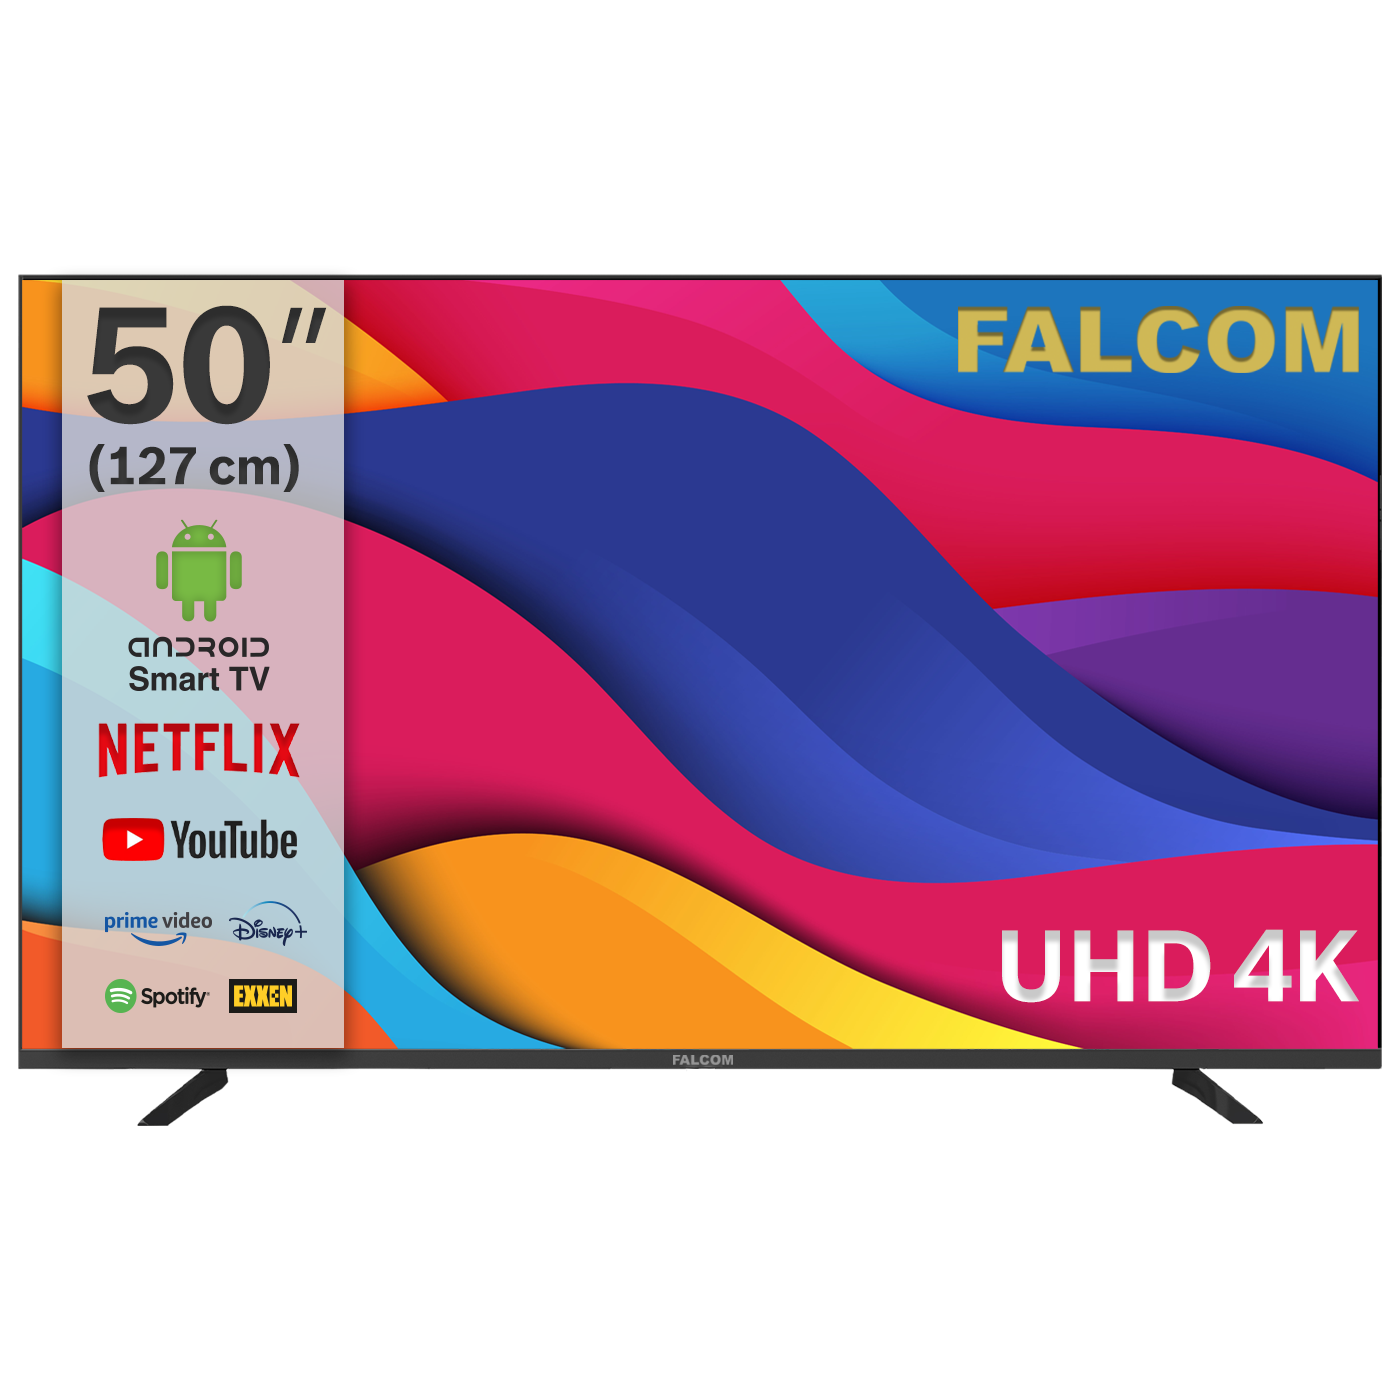 Falcom TV - Smart LED TV@Android 50